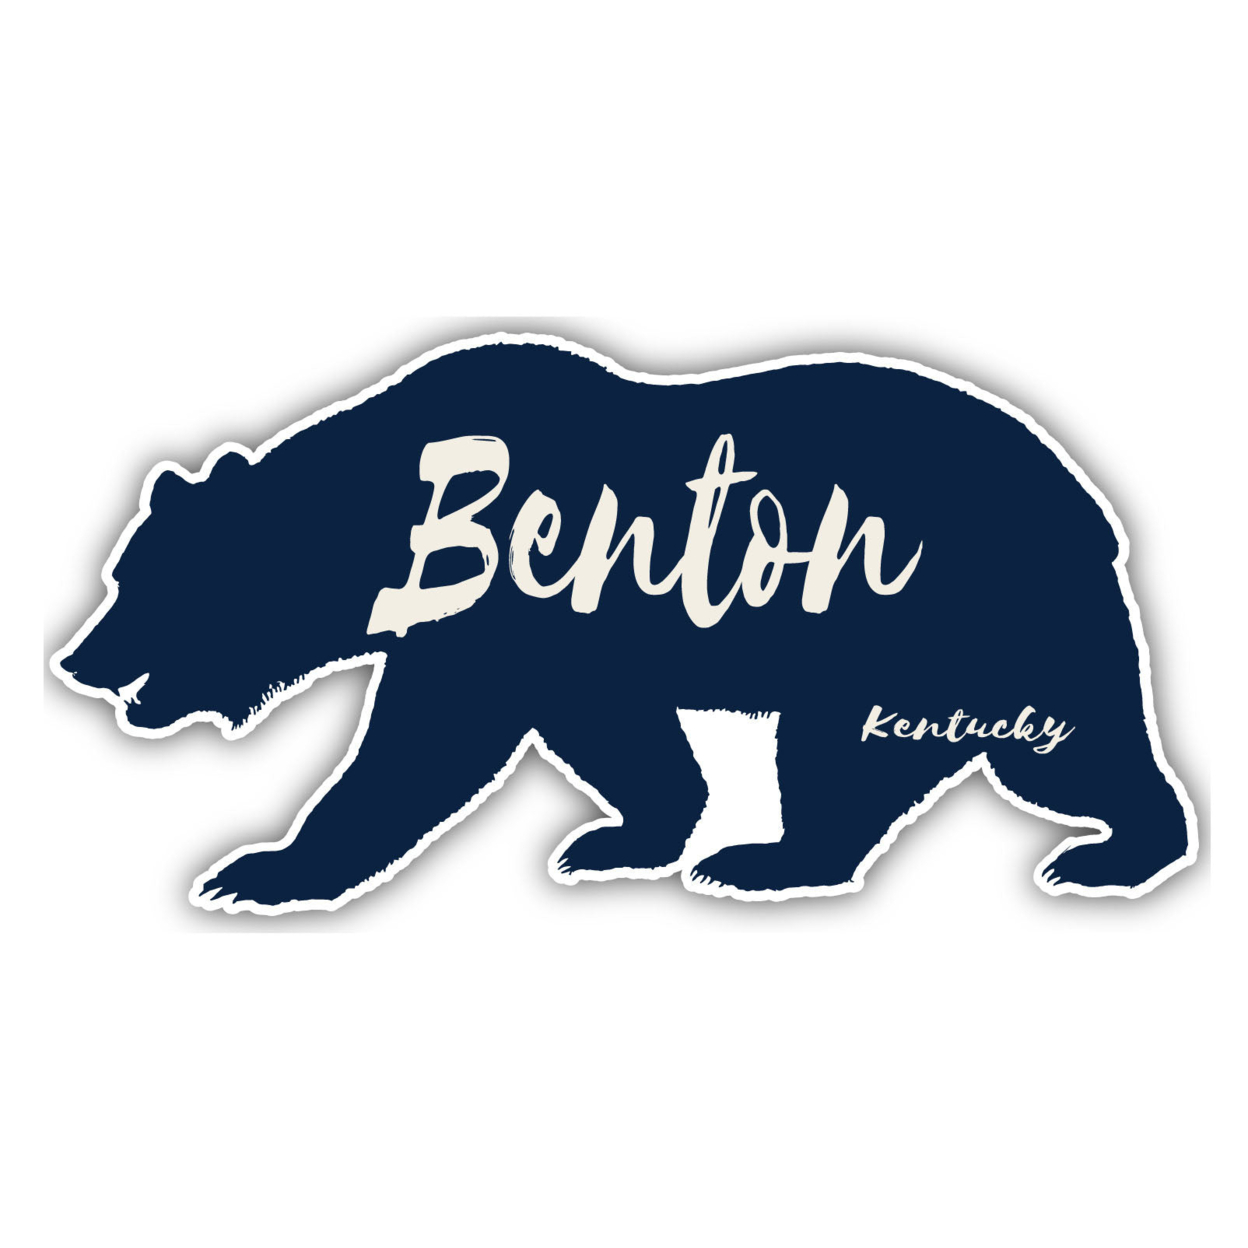 Benton Kentucky Souvenir Decorative Stickers (Choose Theme And Size) - Single Unit, 12-Inch, Great Outdoors